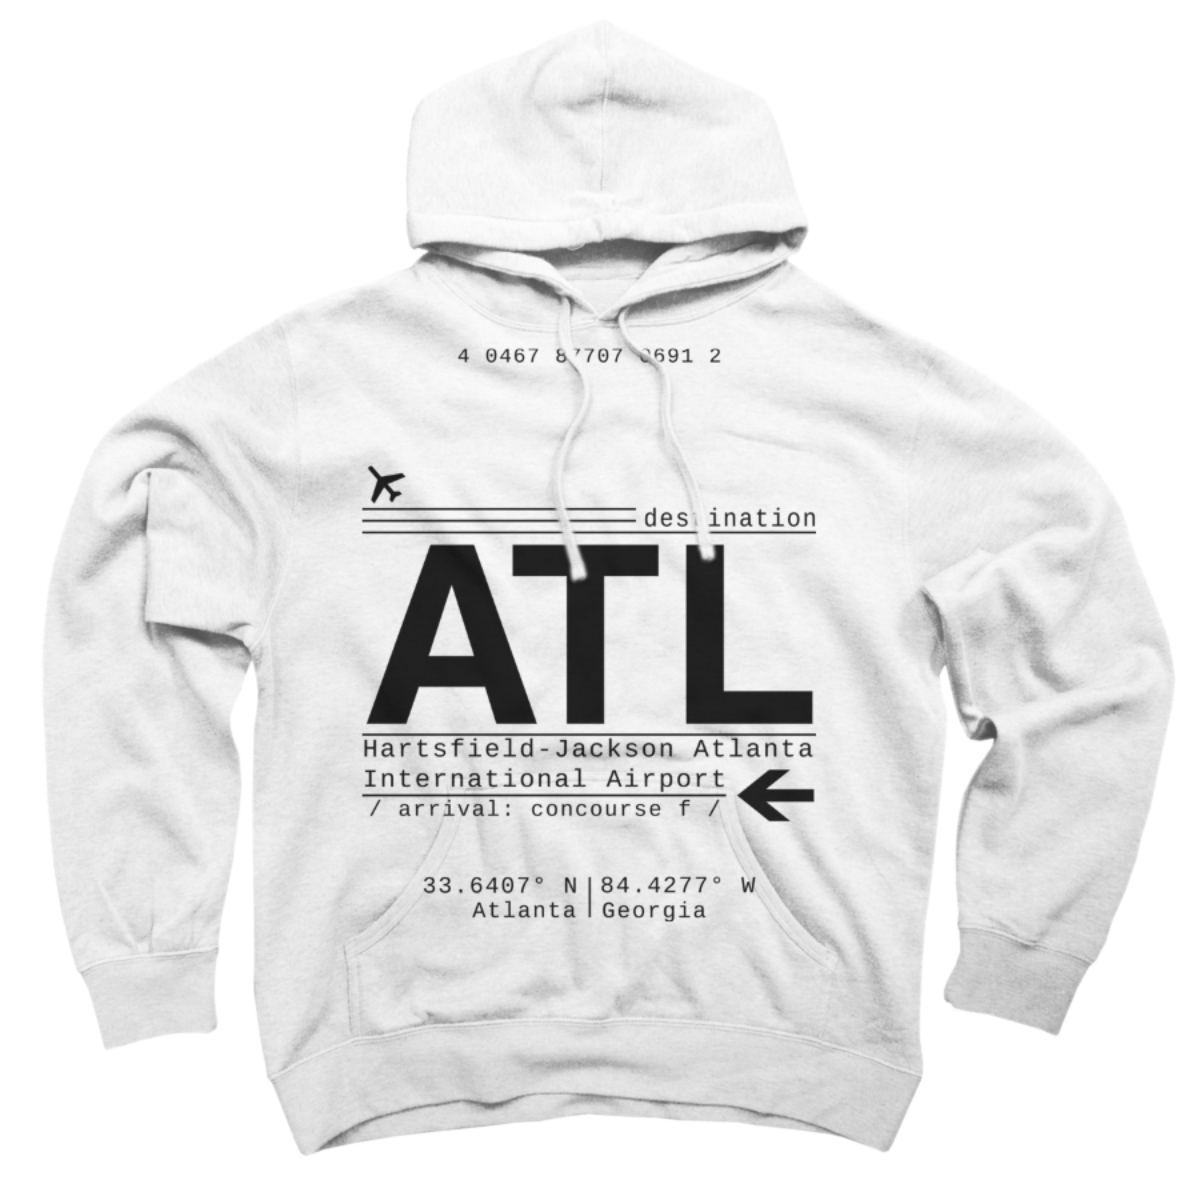 atlanta georgia hoodie